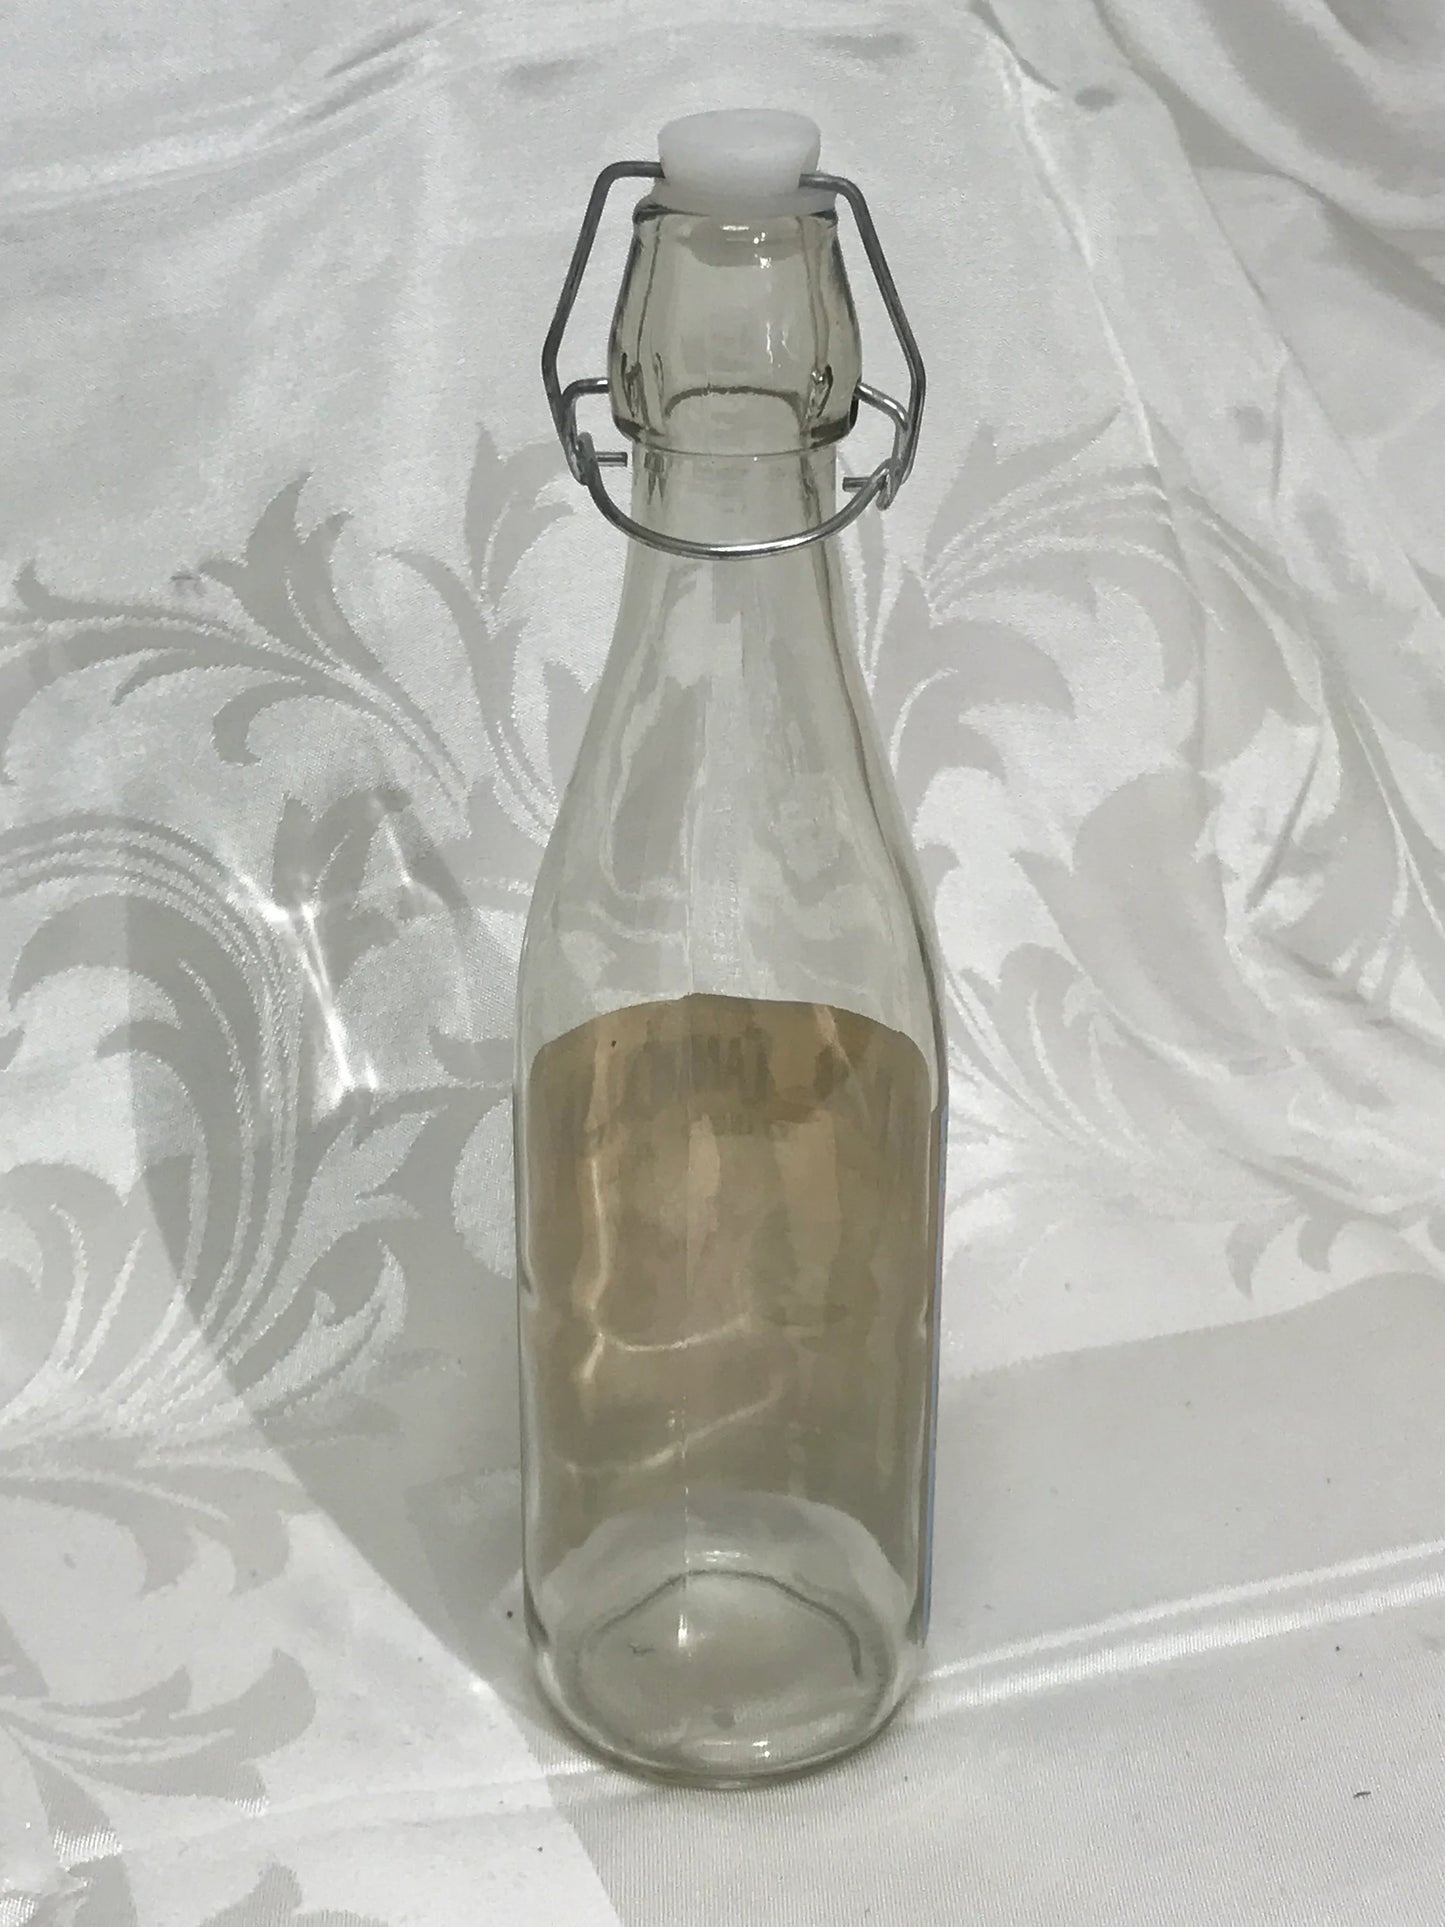 Royal Canadian Antique Bottle